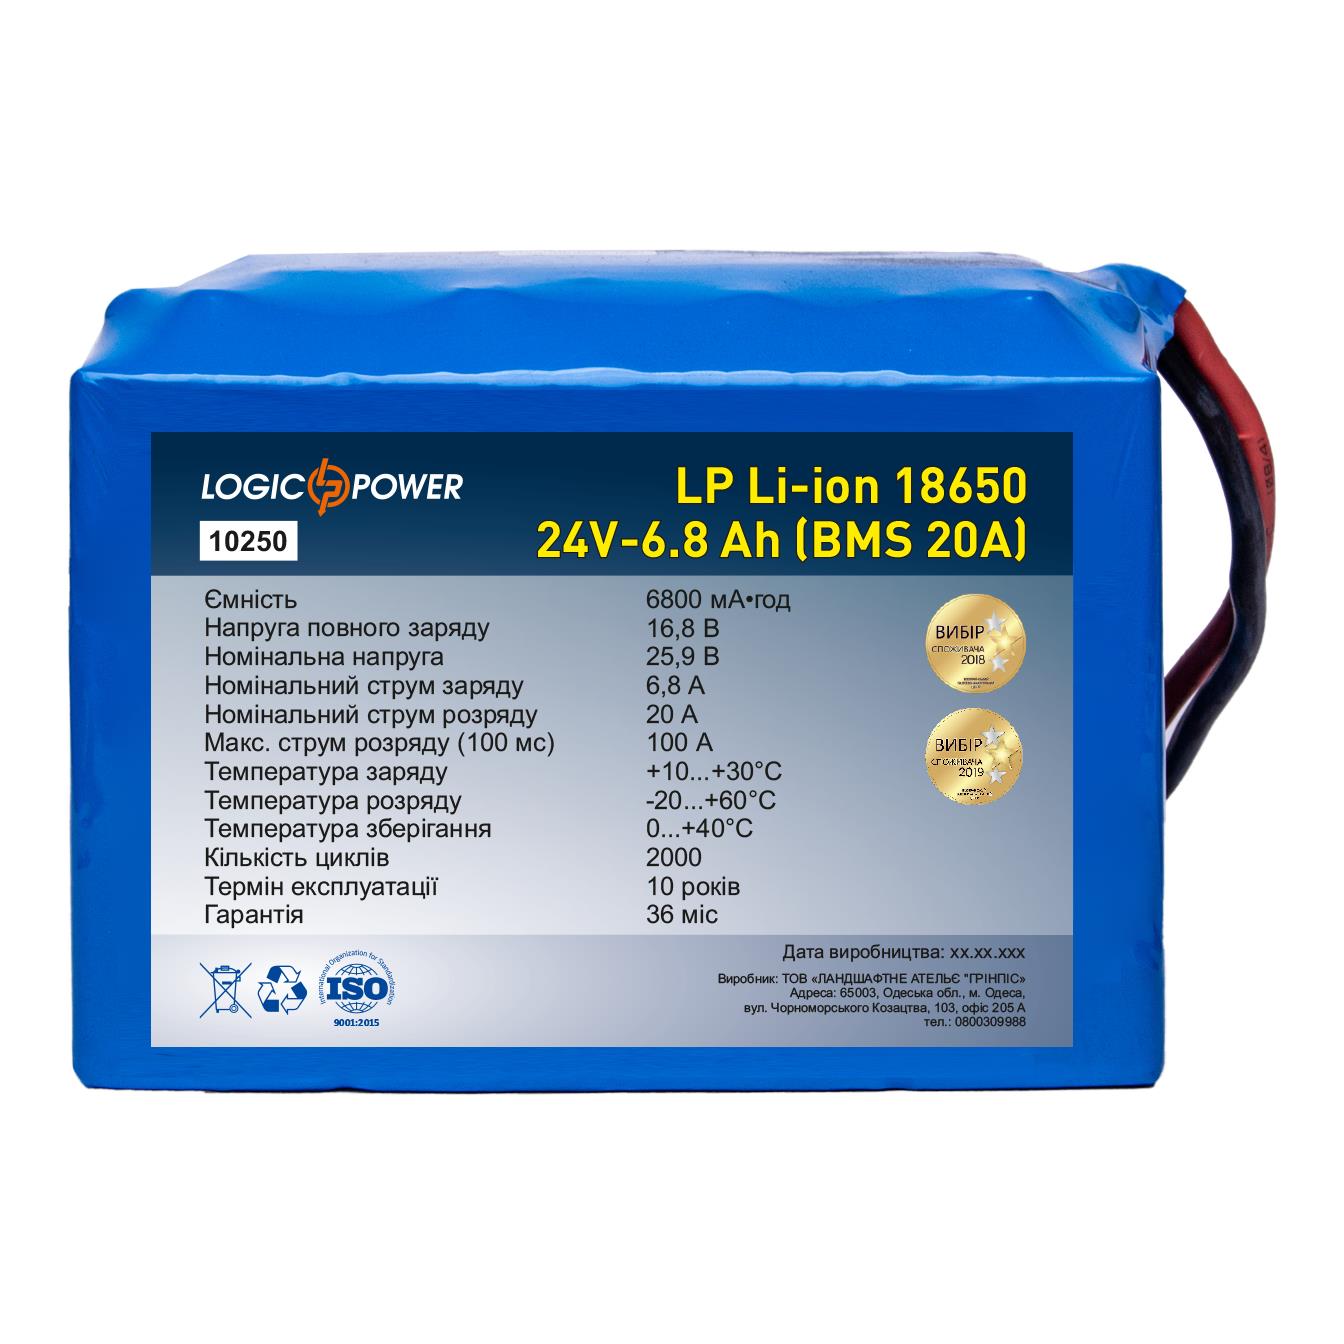 Акумулятор Li-Ion LogicPower LP Li-ion 18650 24V - 6.8 Ah (BMS 20A) (10250)